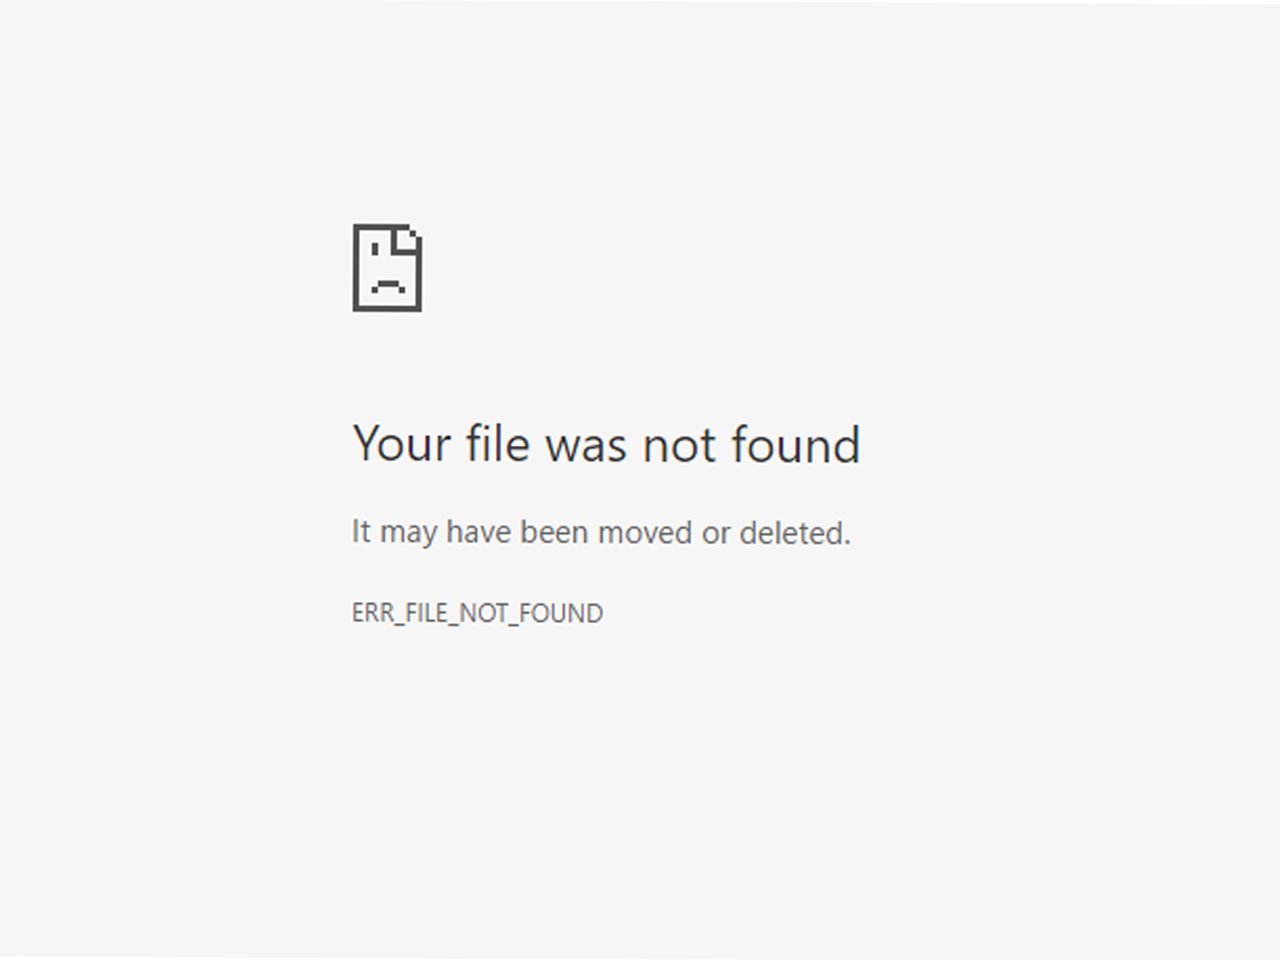 Err_file_not_found файл. Error file not found. Файл не найден фото. Код буллет.